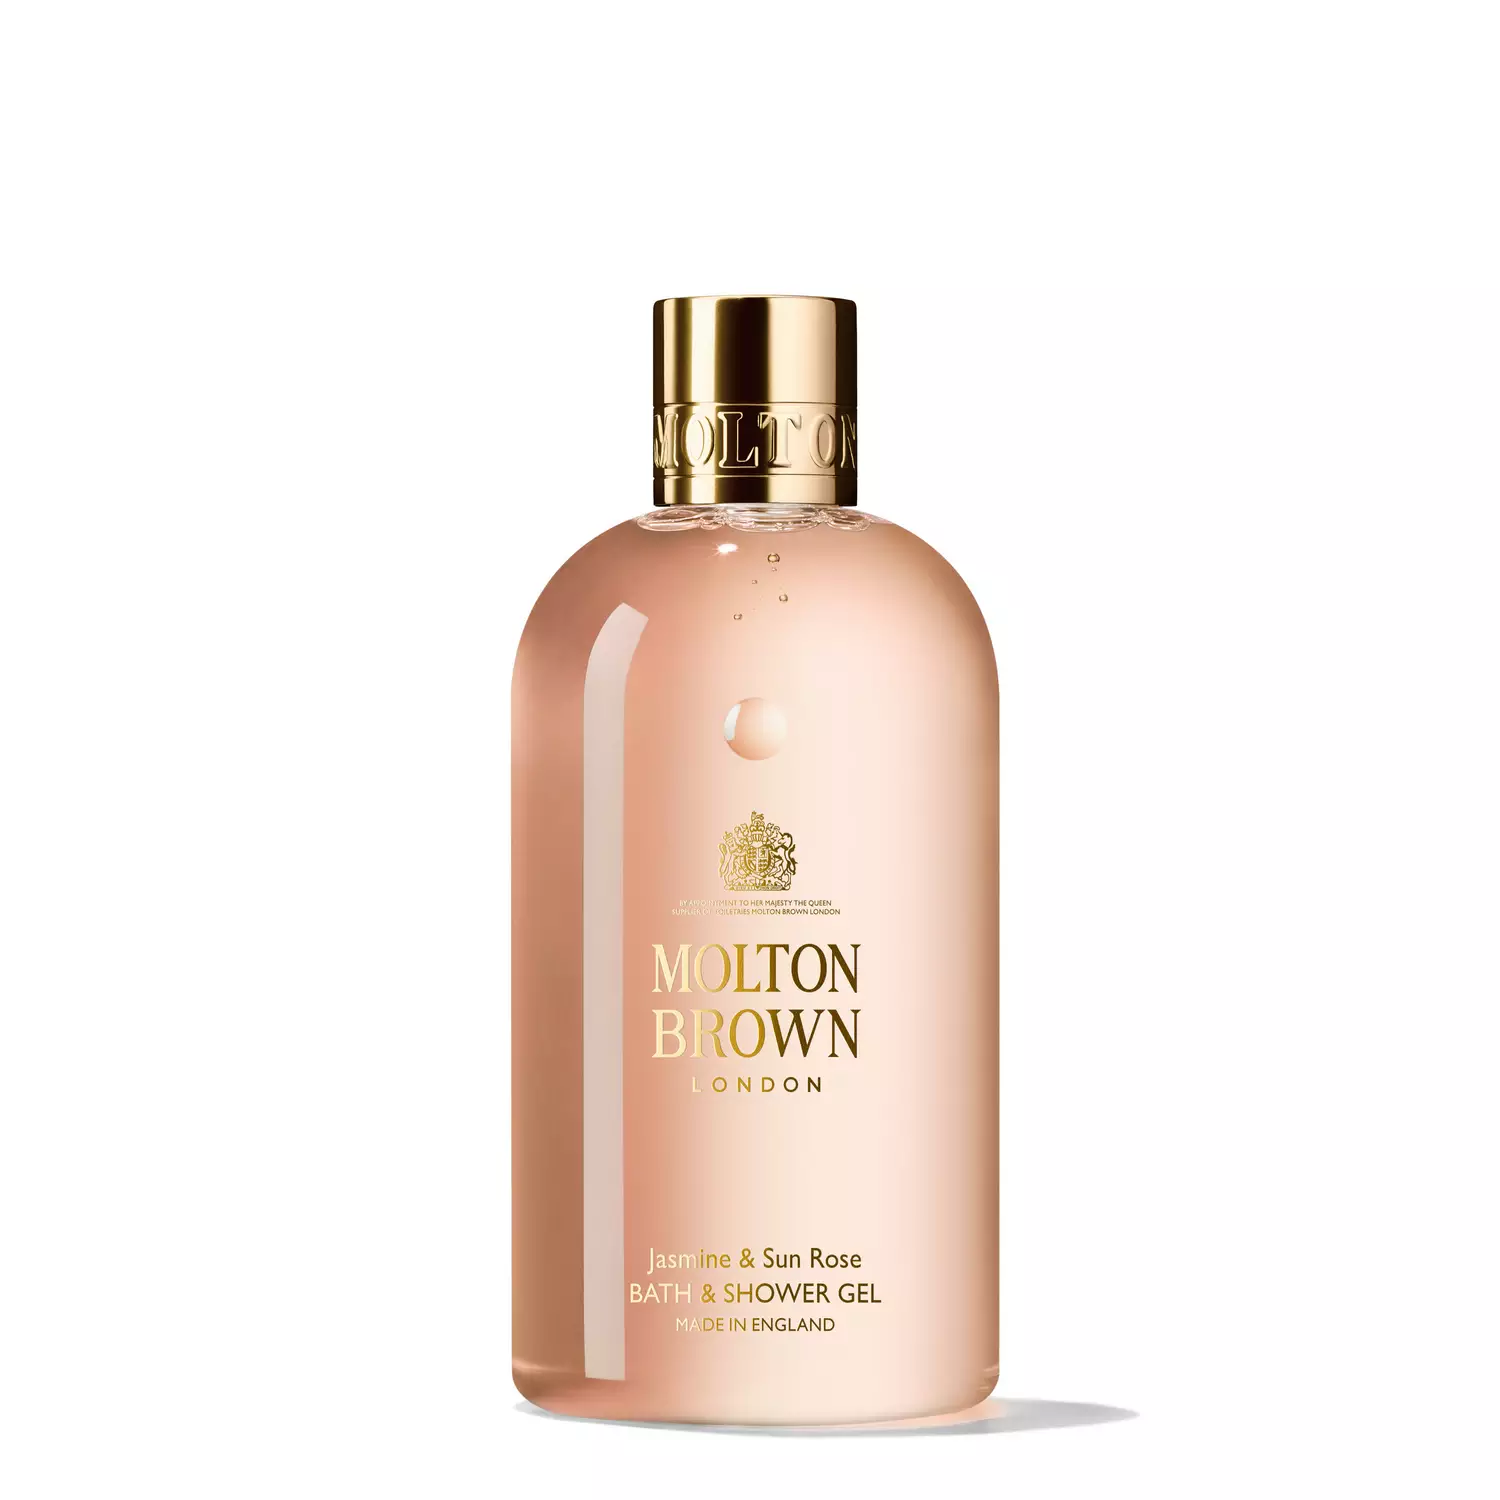 Molton Brown - Jasmine & Sun Rose - Bath & Shower Gel 